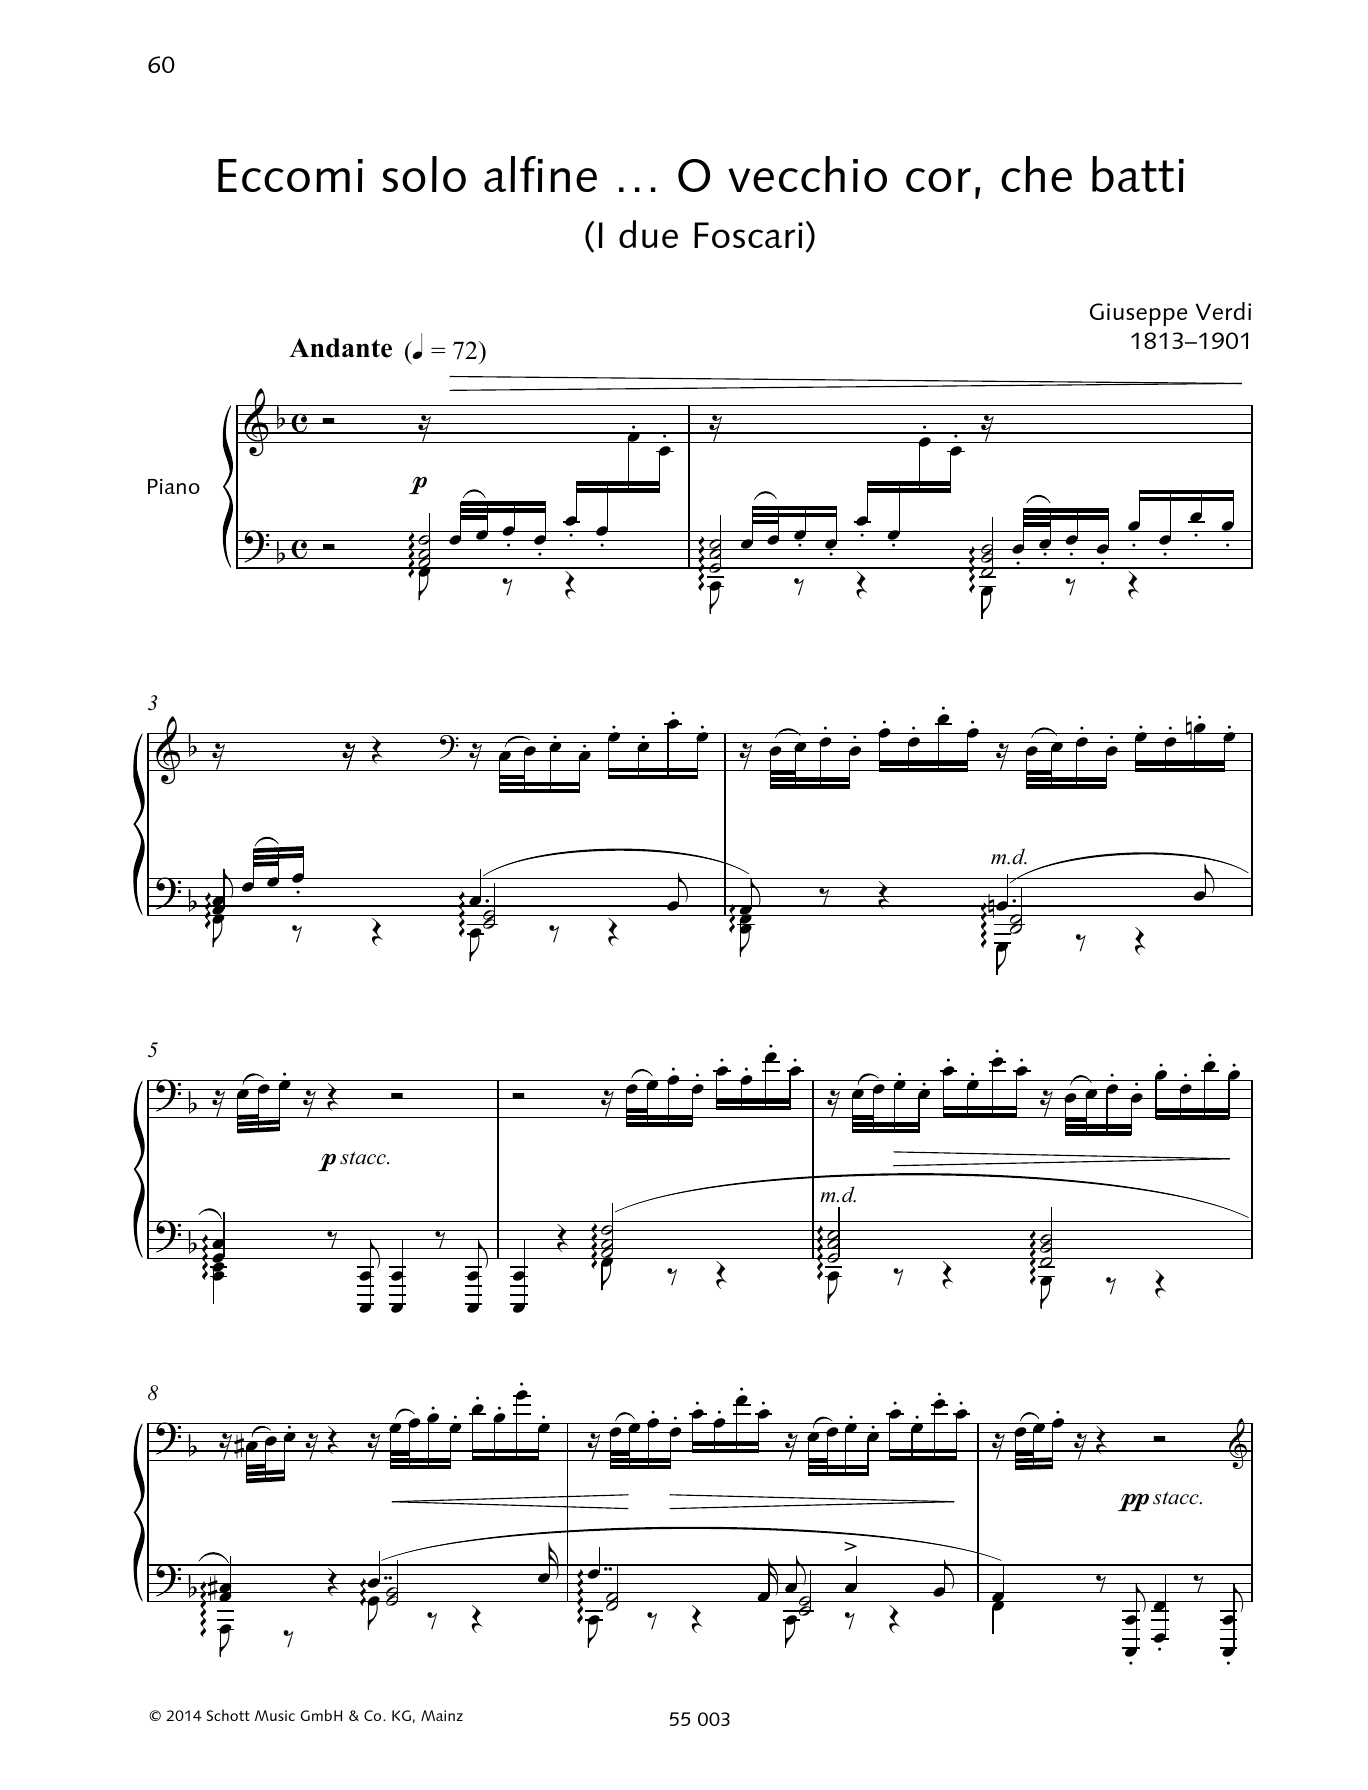 Giuseppe Verdi Eccomi solo alfine ... O vecchio cor, che batti sheet music notes and chords arranged for Piano & Vocal